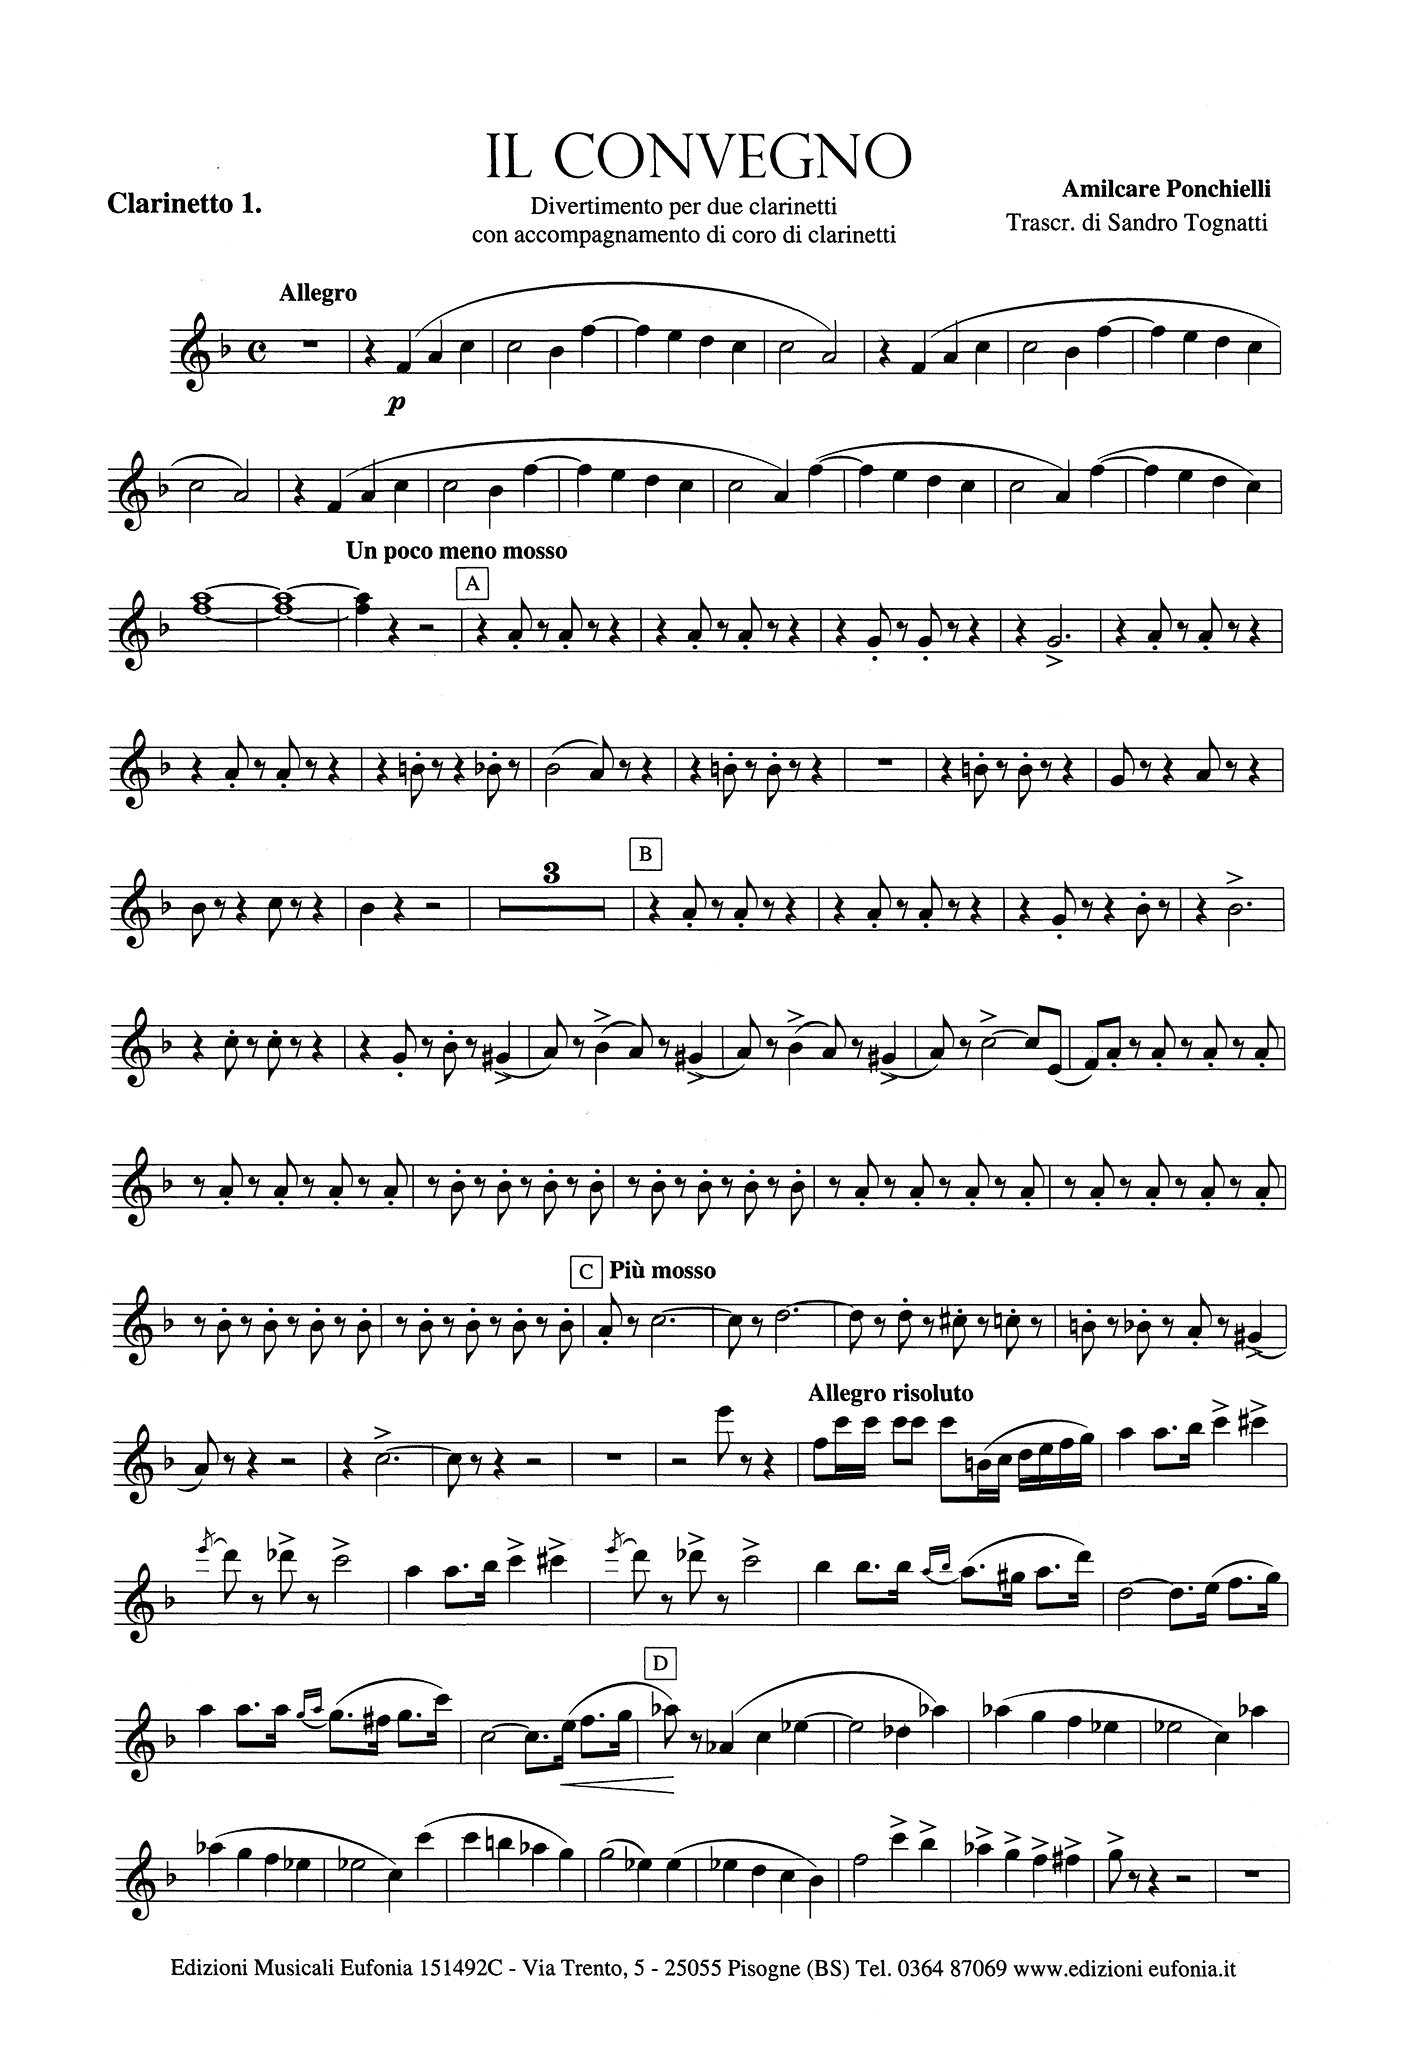 Ponchielli Il Convegno, Op. 76 clarinet choir arrangement first clarinet part